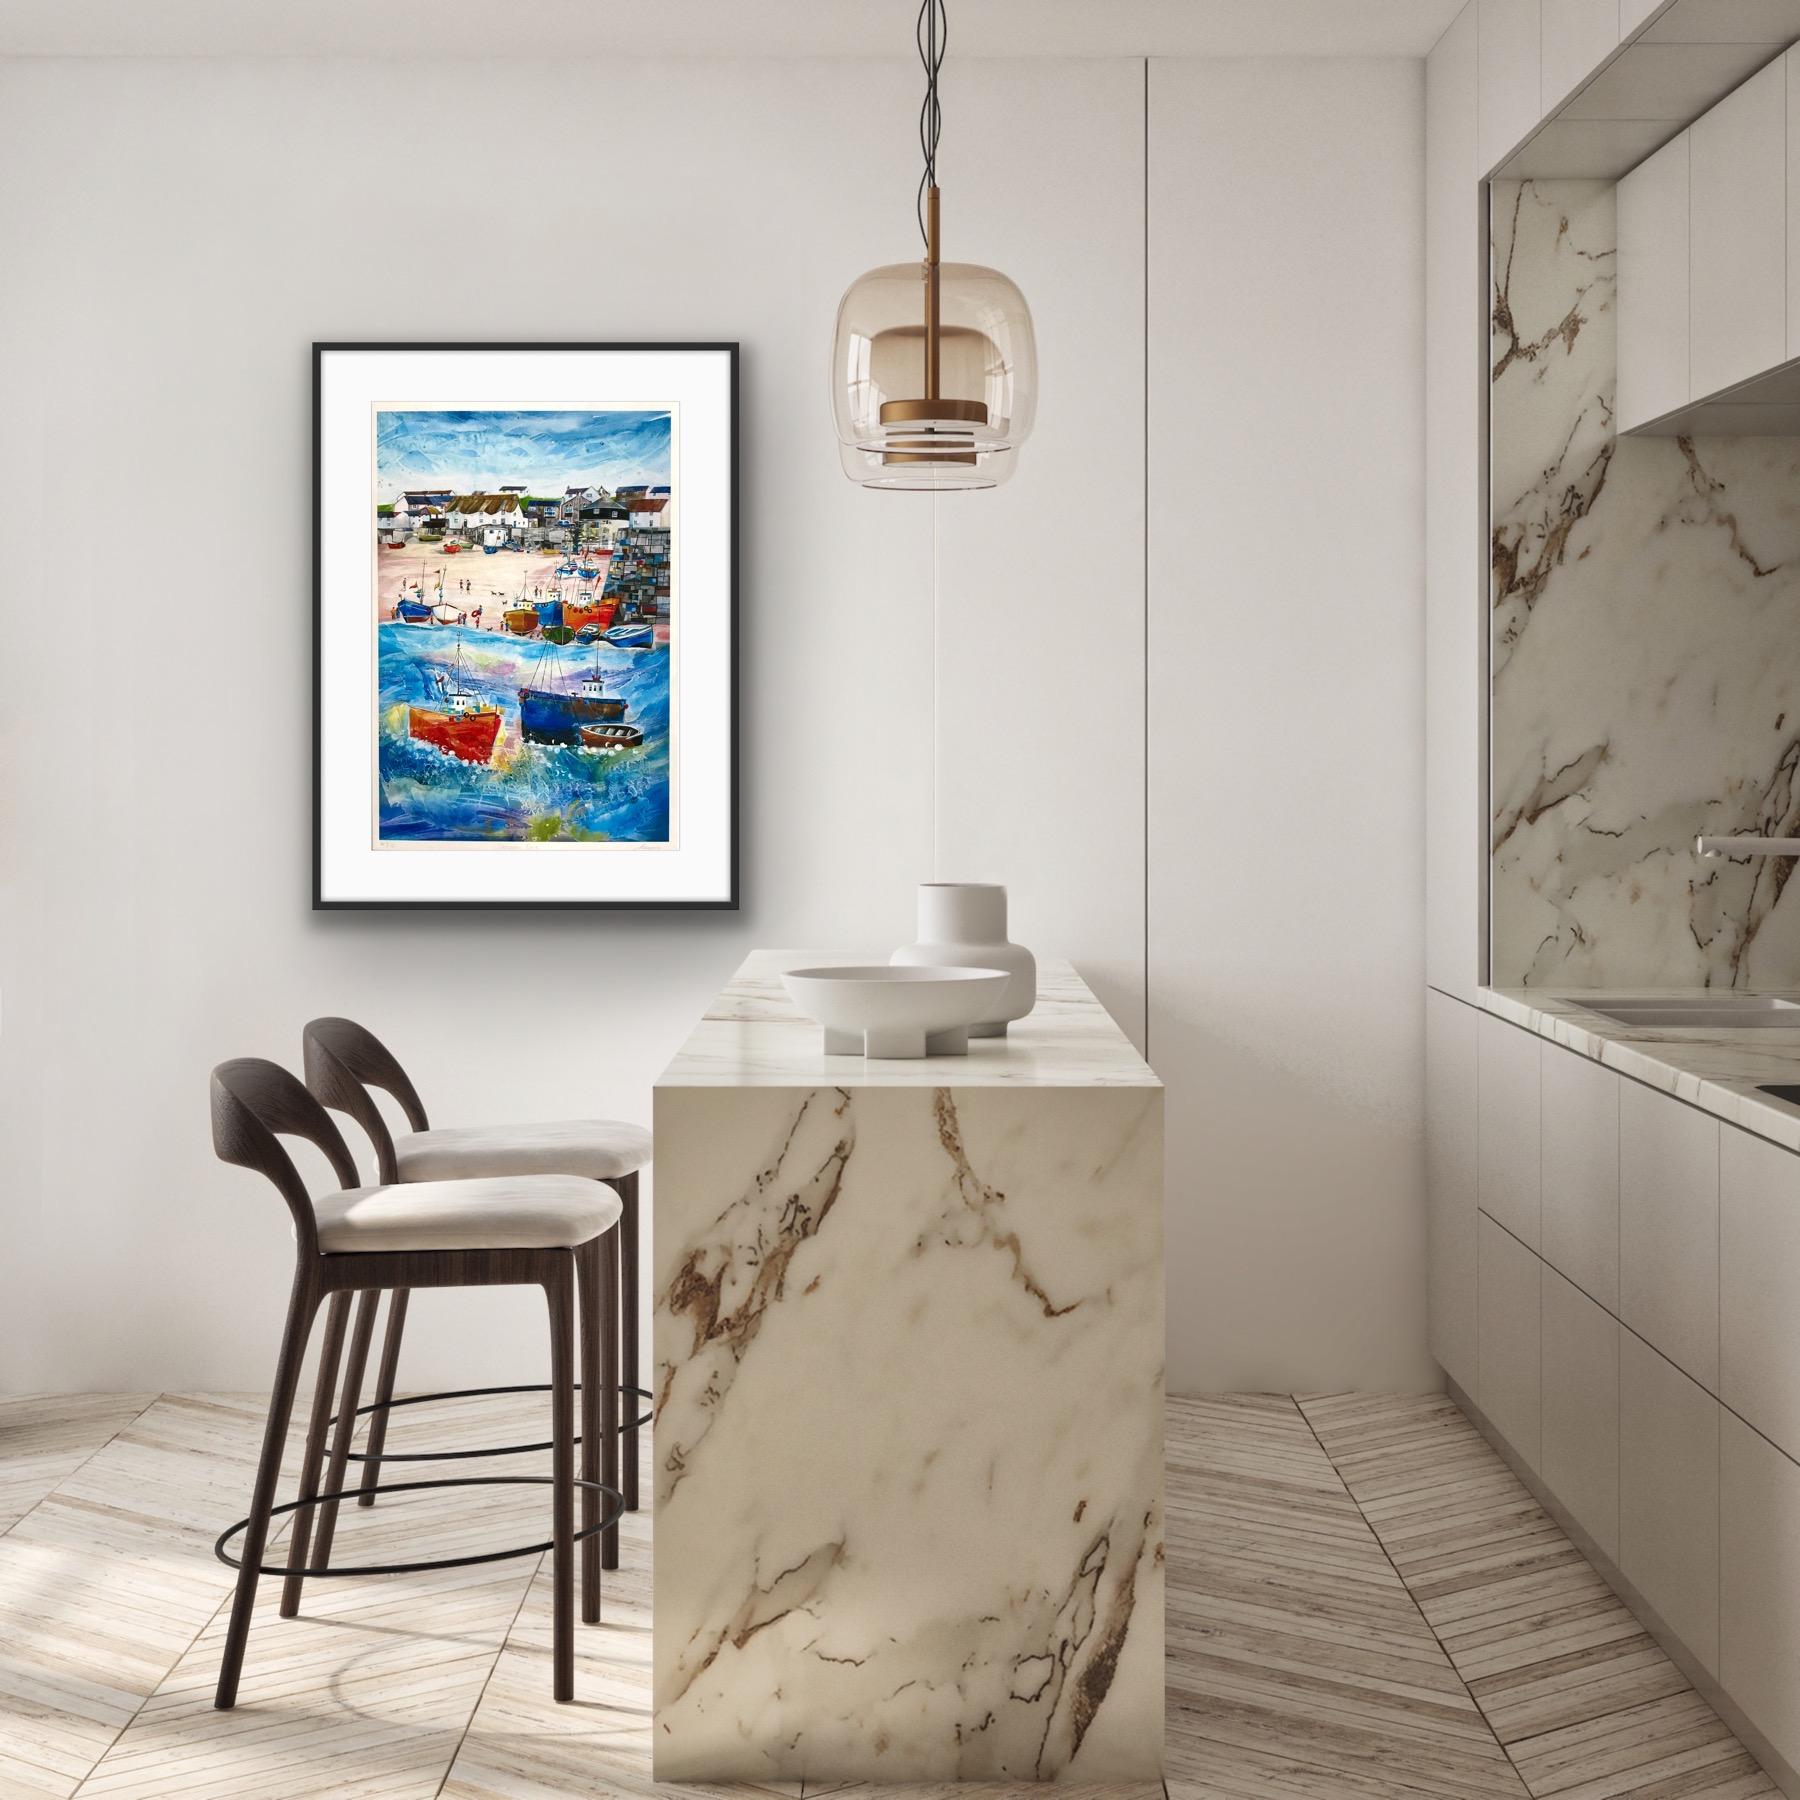 Sennen Cove, Cornwall, Mounted Giclée print, Seaside, Coastal, Beach, Boats, Sun For Sale 6